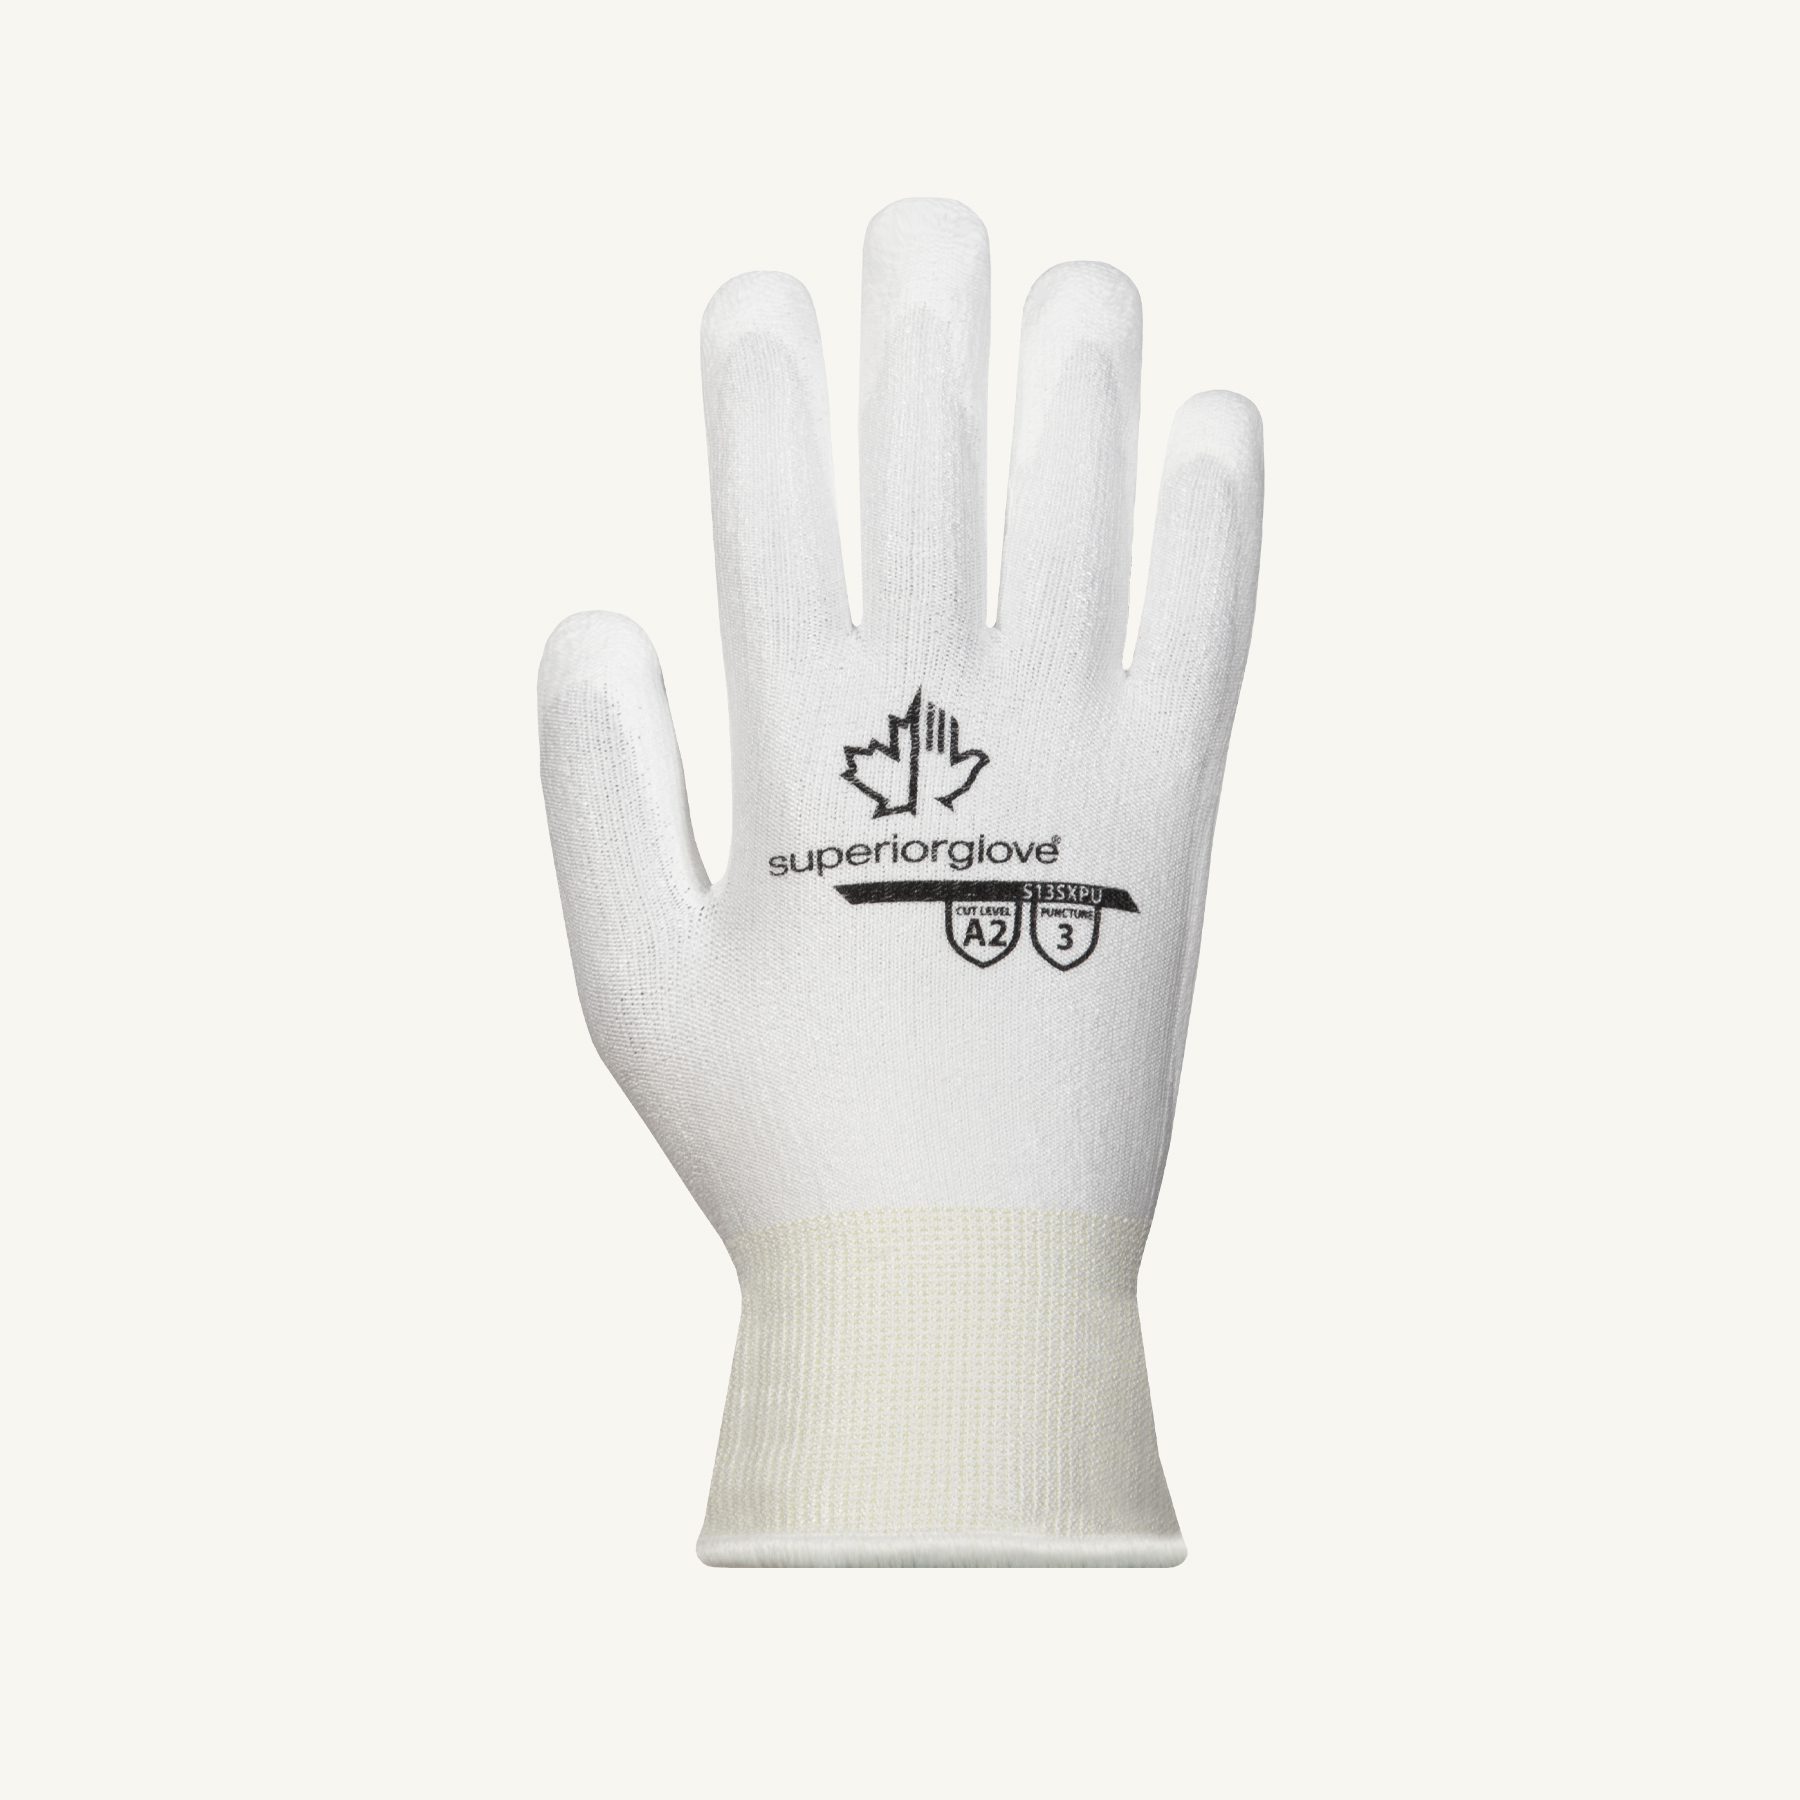 Superior Glove Works S13BKPUQ Size:XL Nylon 13 Gage Palm Coated